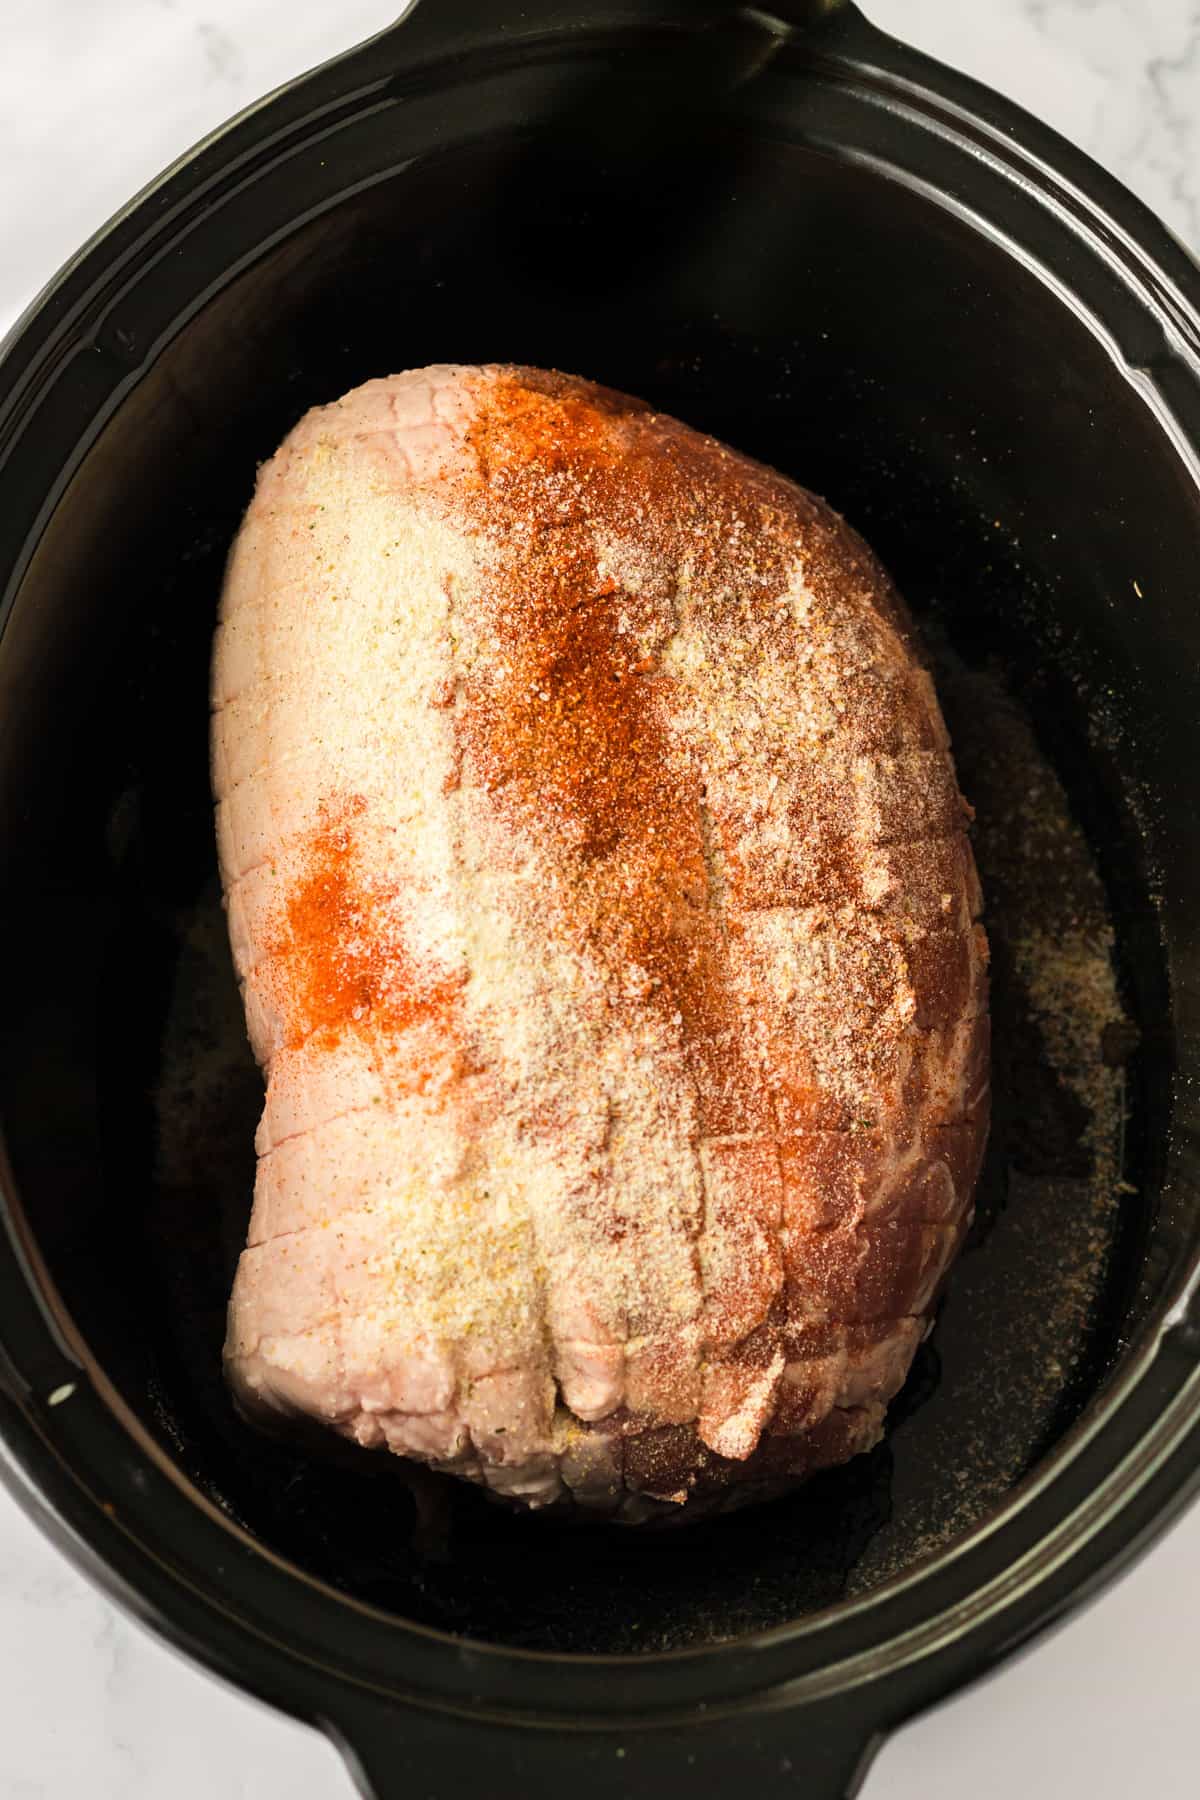 Pork shoulder butt roast in crockpot topped with seasonings.